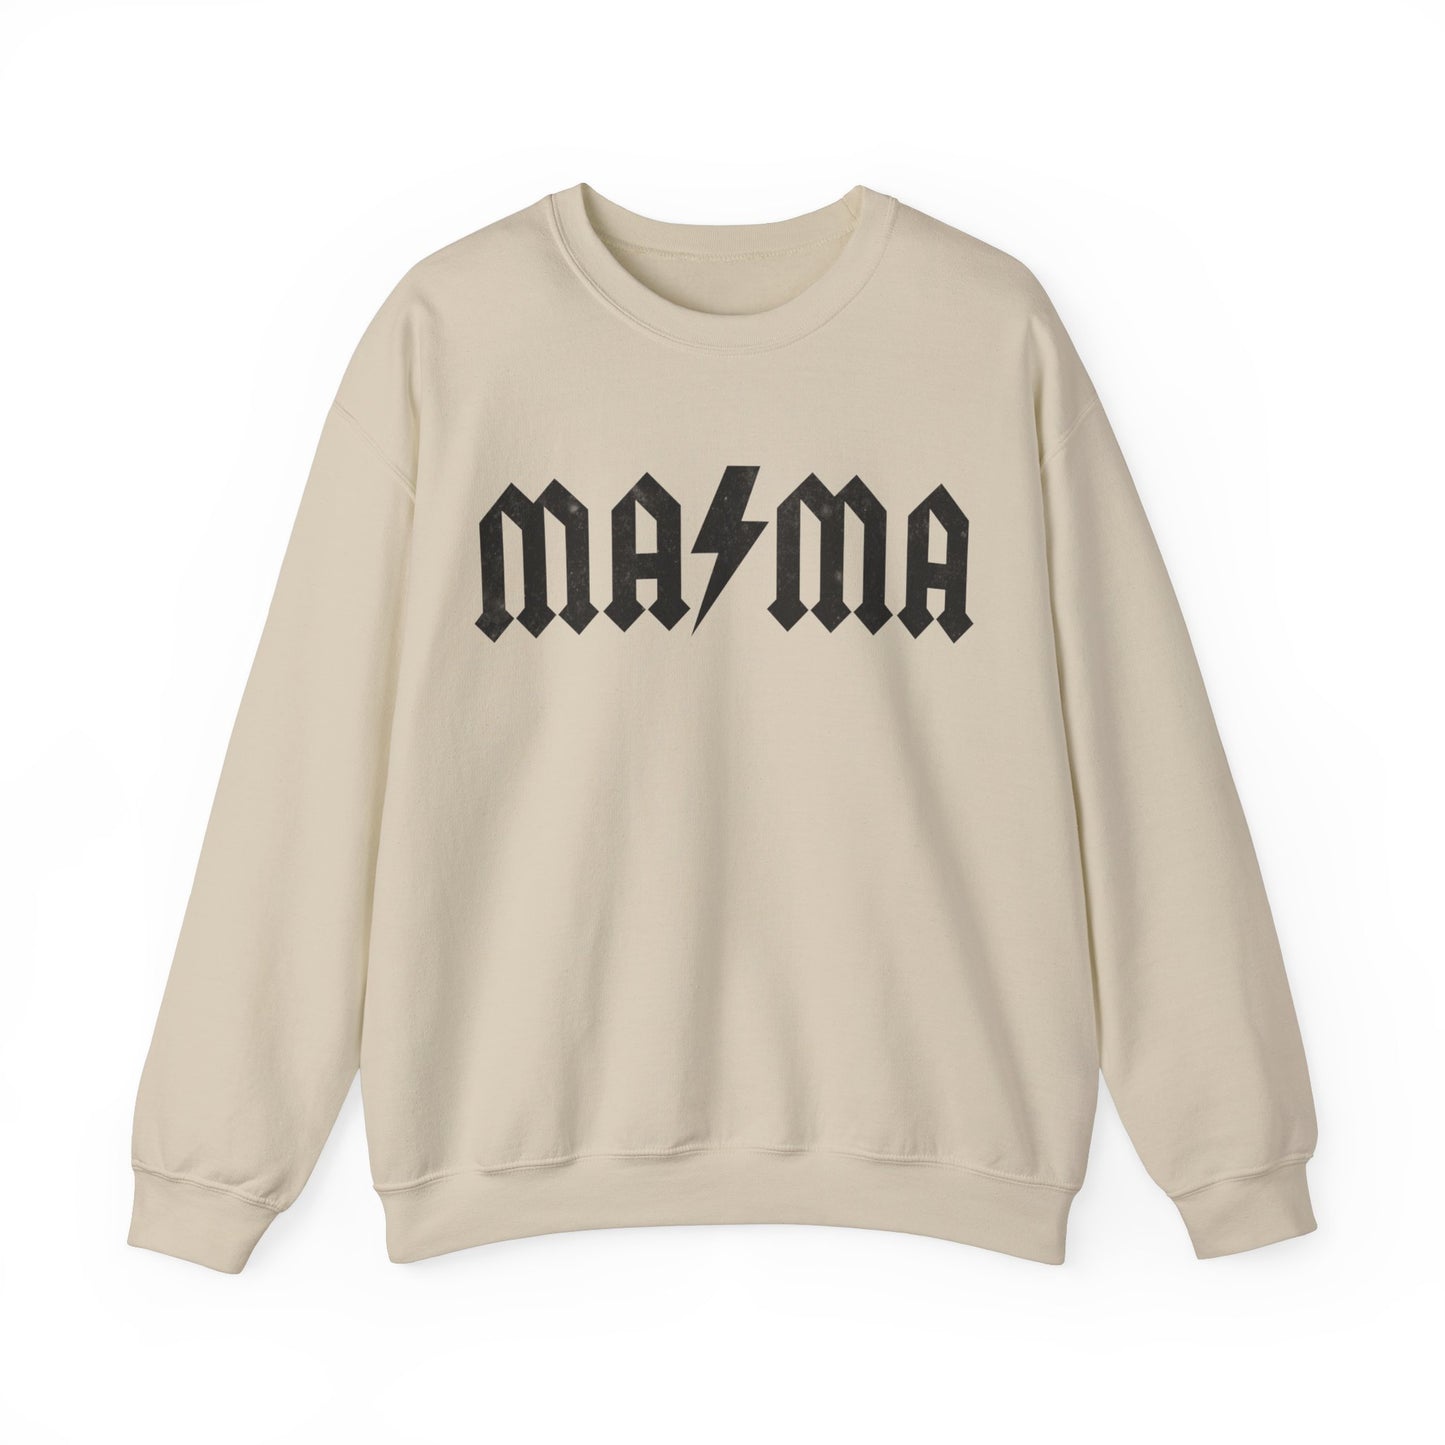 Retro Mama Sweatshirt, Mom Sweatshirt, Mothers Day Gift, Retro Mama Sweatshirt, Best Mama Sweatshirt from Daughter, Gift for Best Mom, S1156